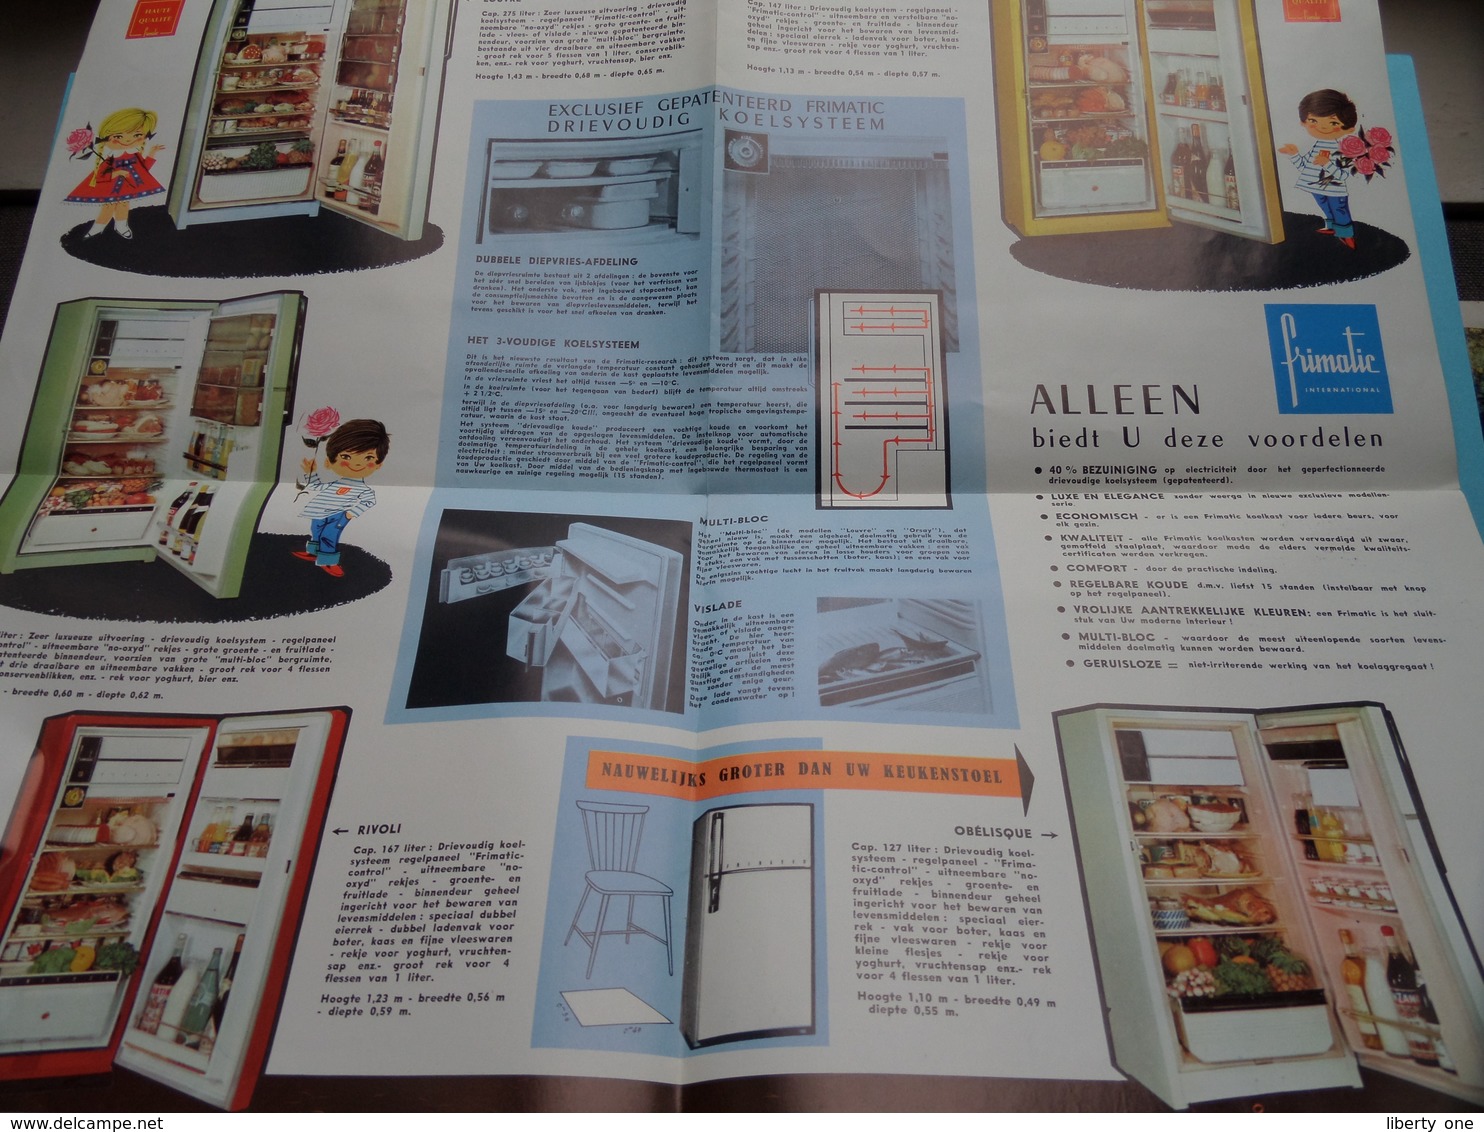 FRIMATIC Int. - Koelkast ( Prestige Reeks / Edit. Alain - 1961 ) Brochure / Complet > NL ! - Publicités